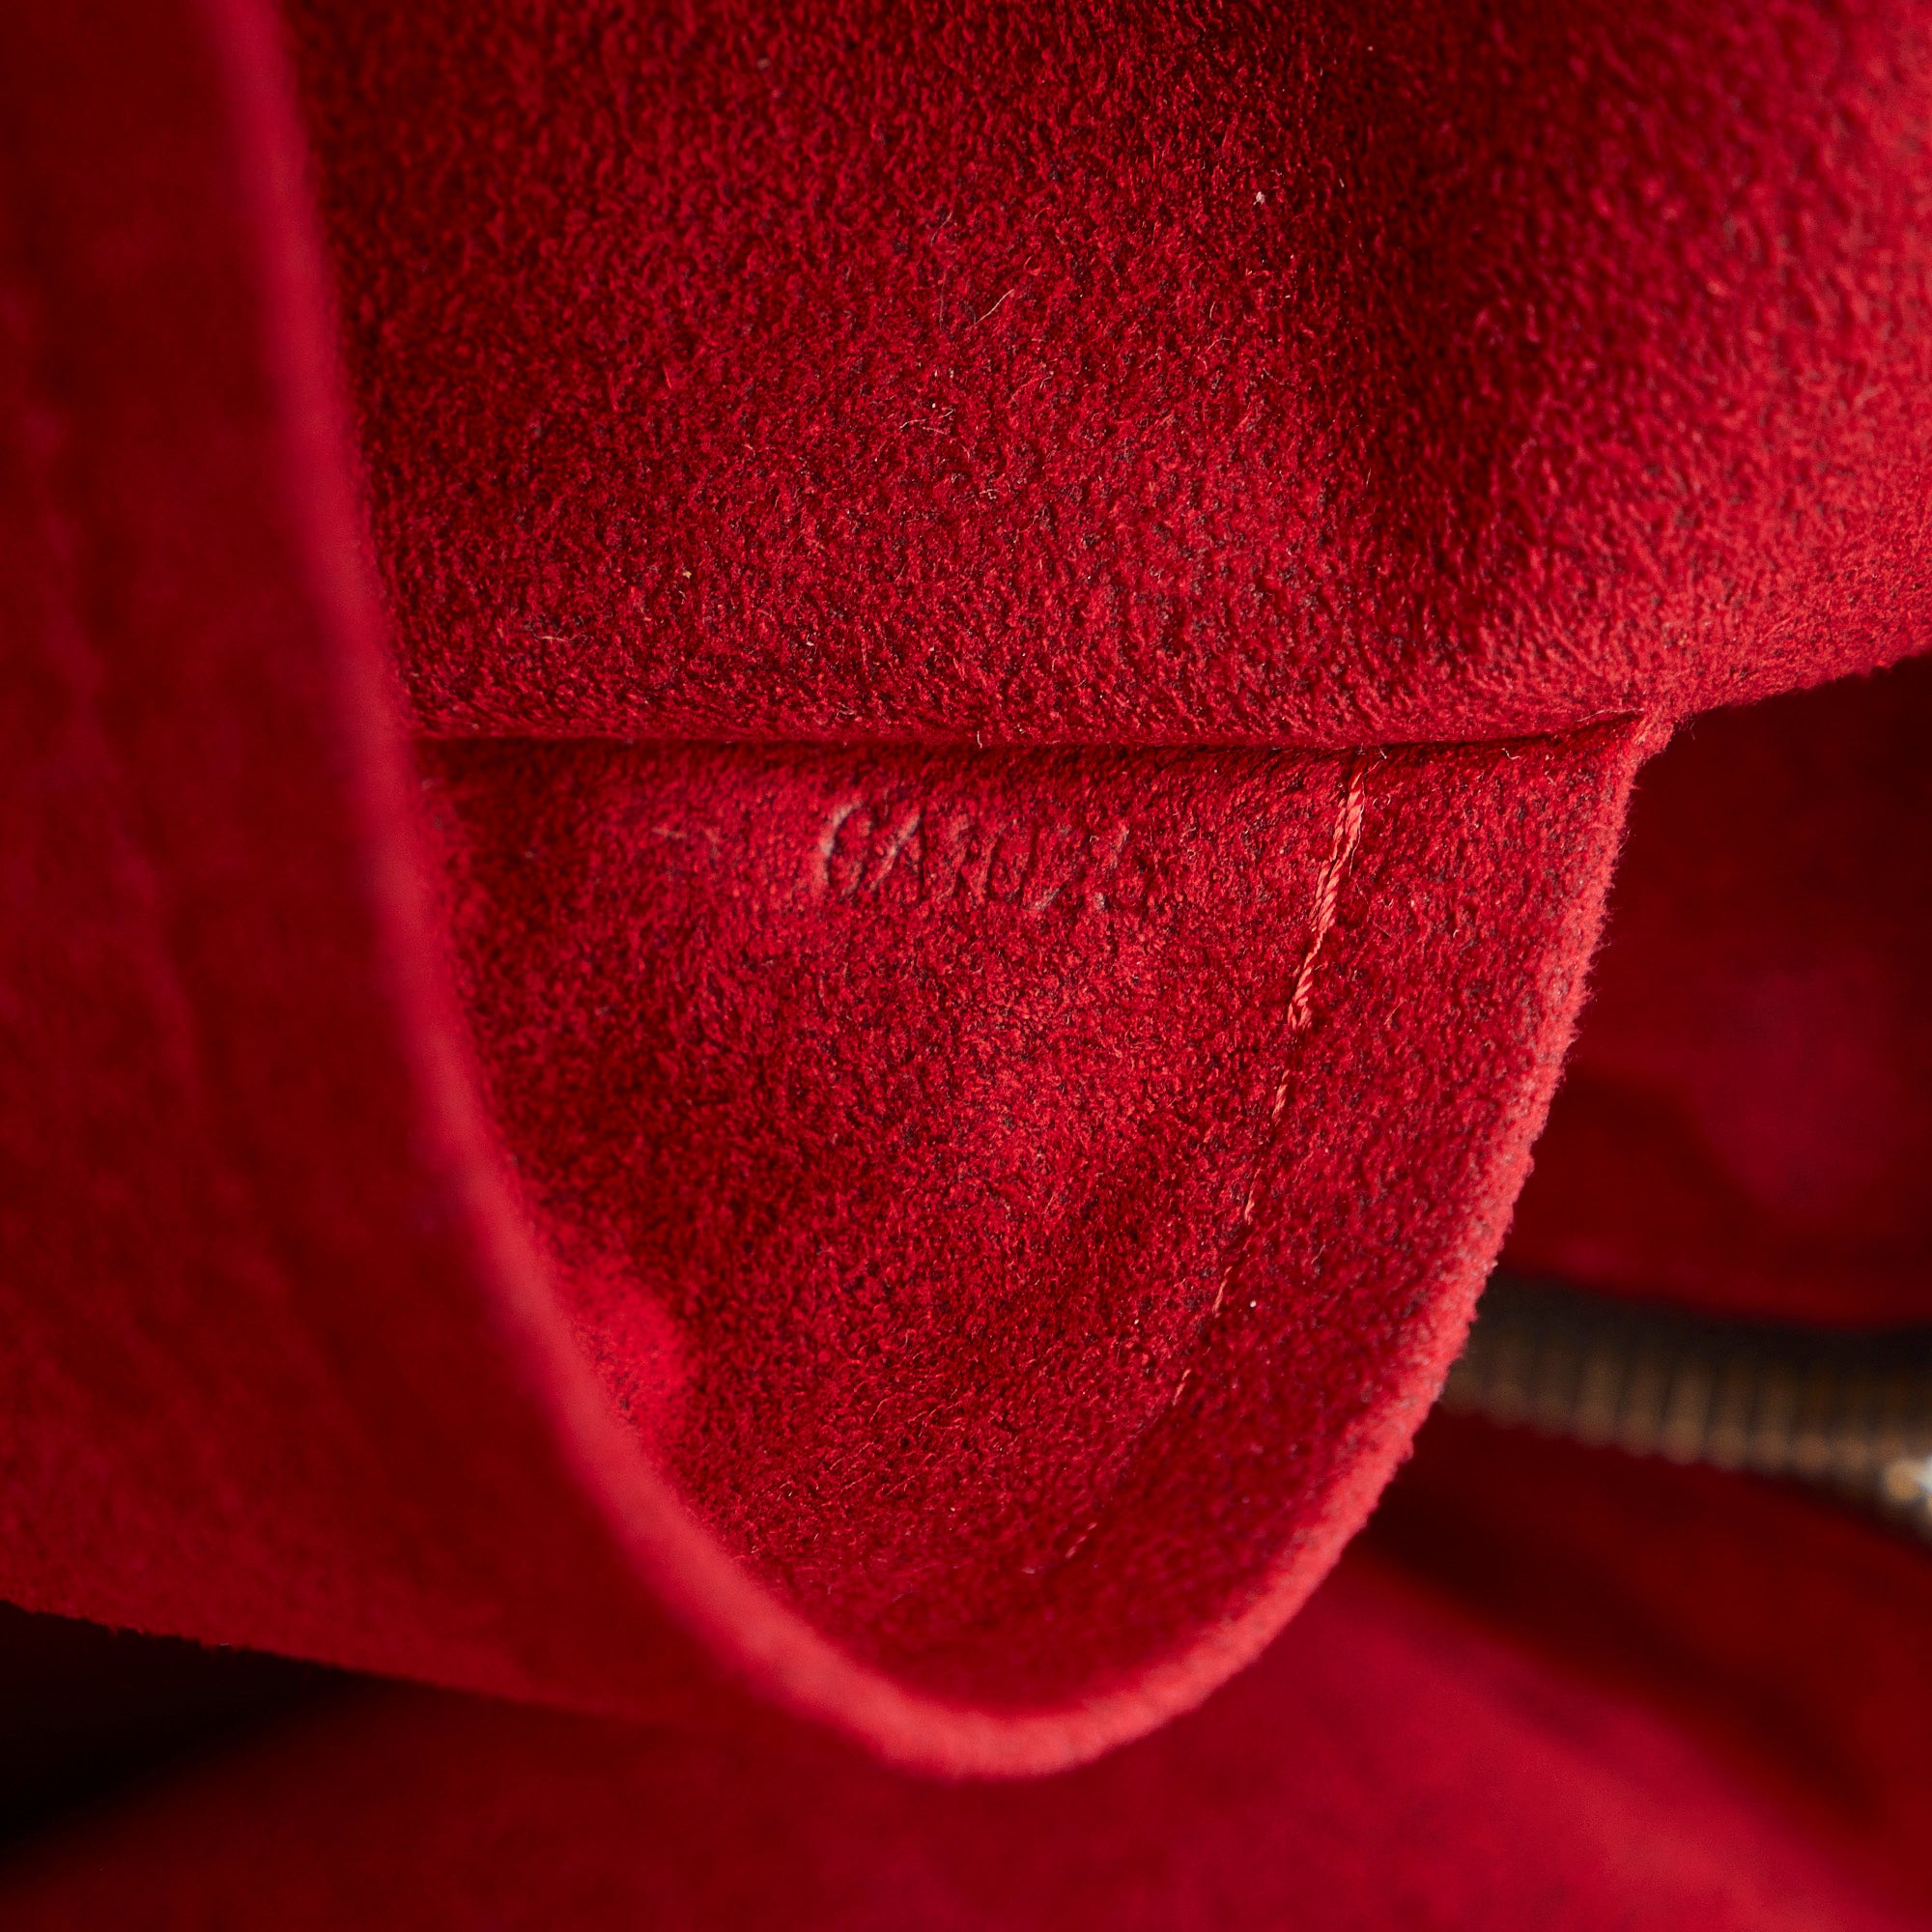 Brown Louis Vuitton Monogram Mizi Handbag – Designer Revival